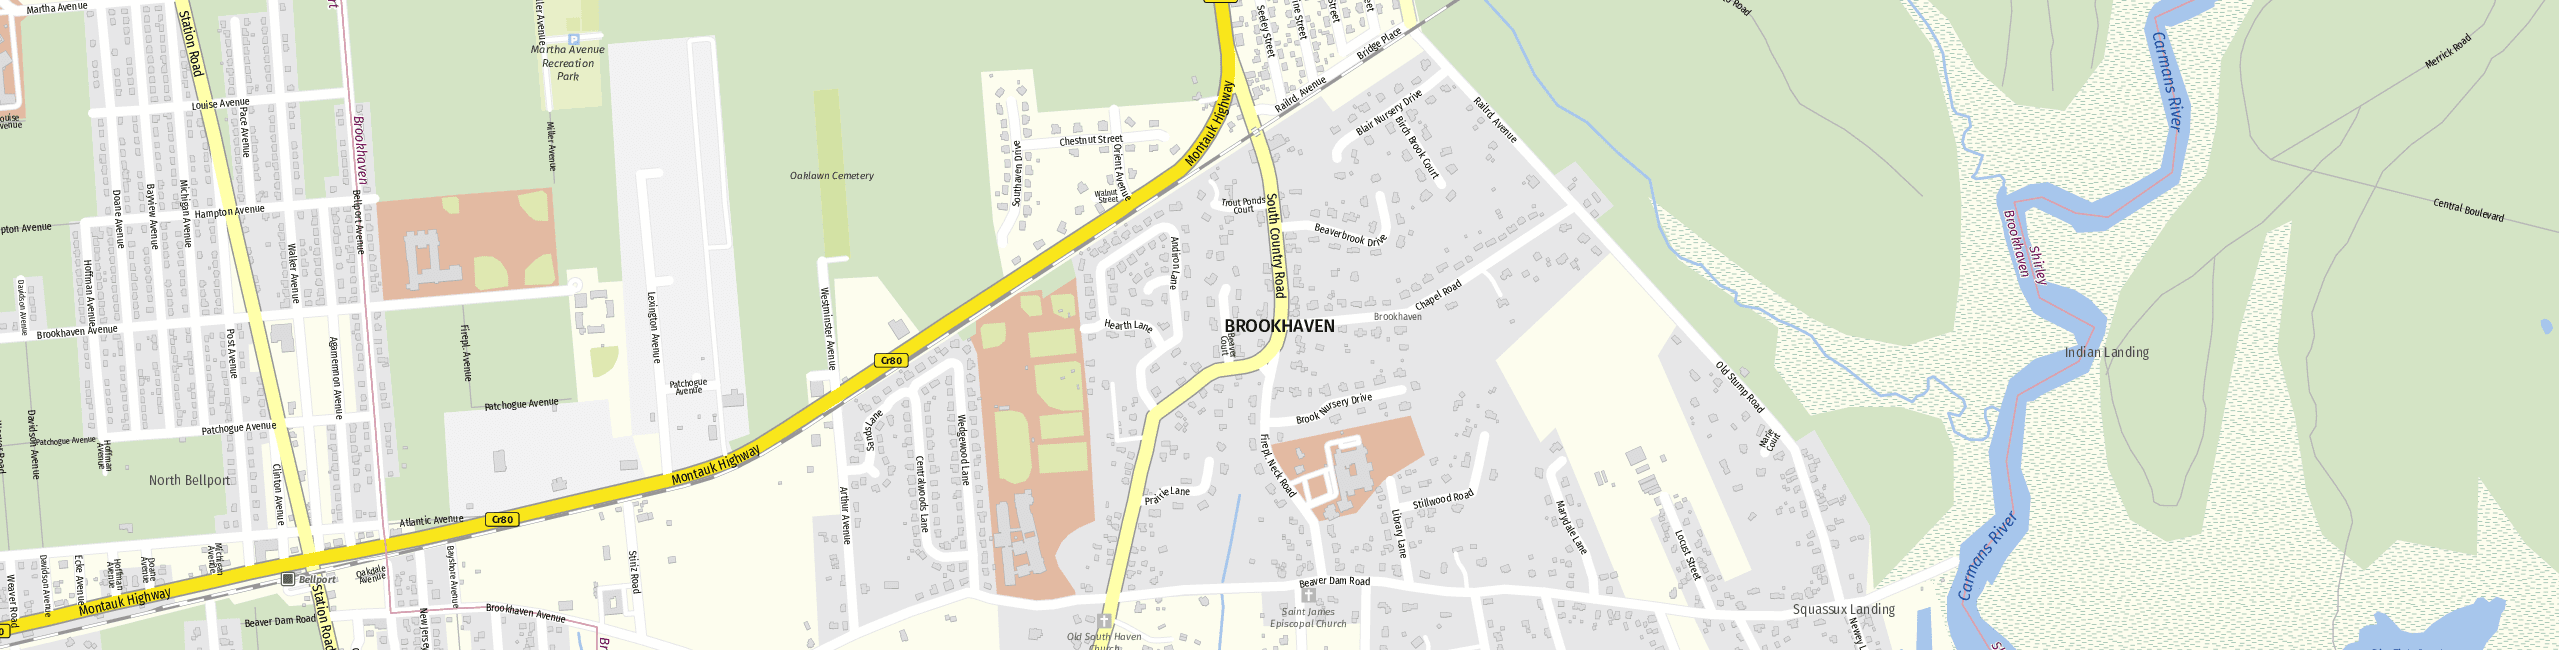 Stadtplan Brookhaven zum Downloaden.